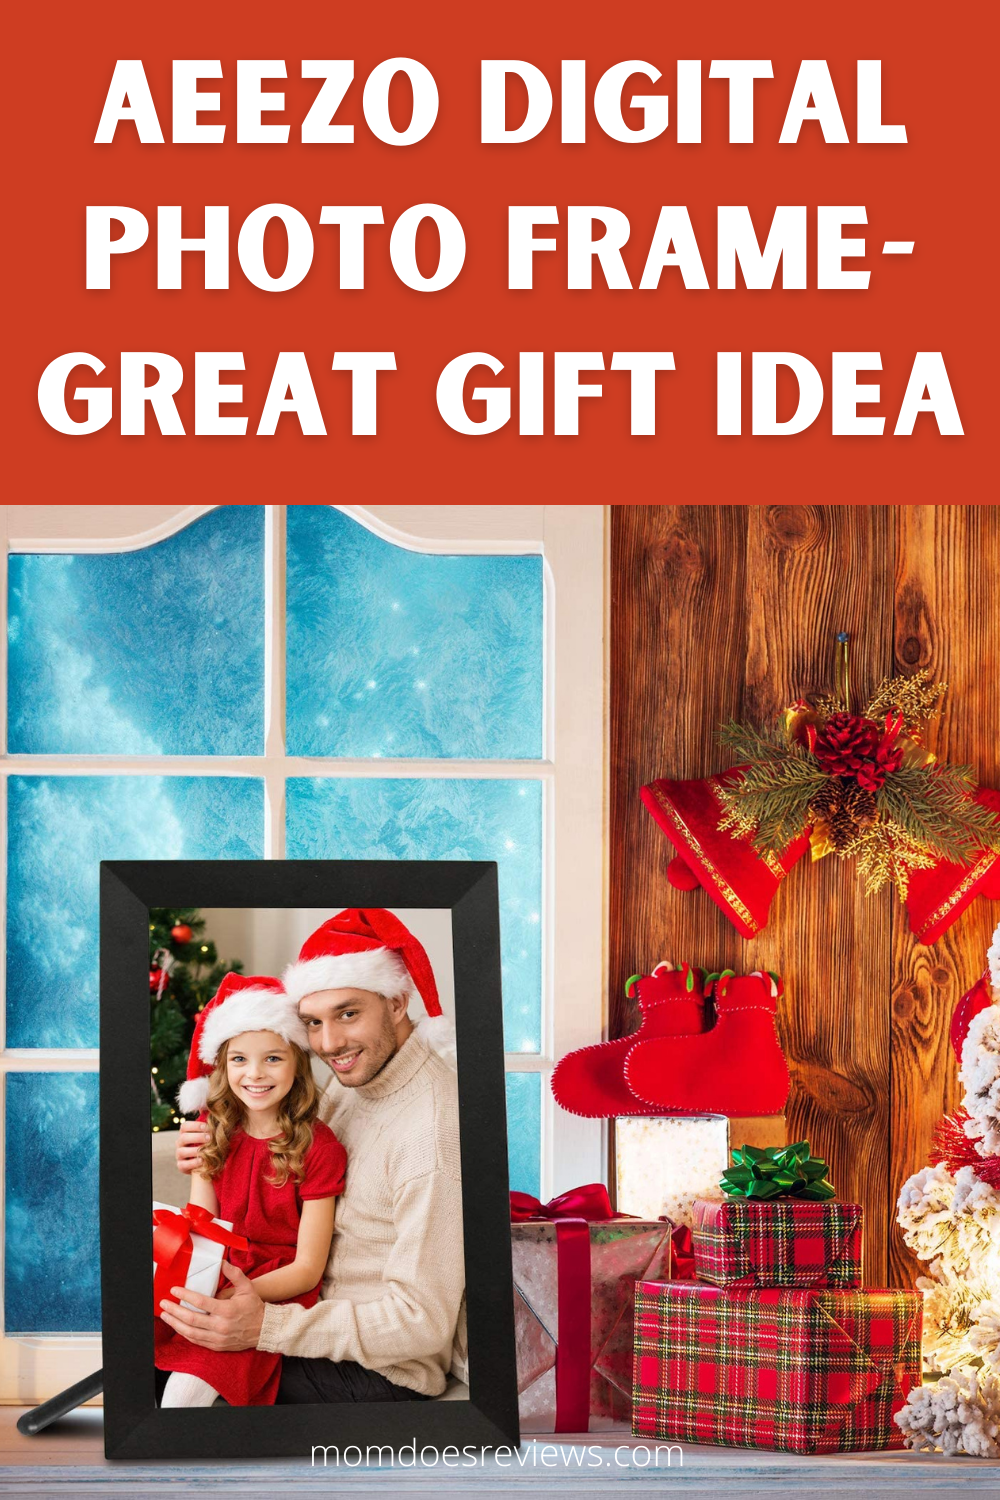 AEEZO Digital Photo Frame- Perfect Gift Idea #MegaChristmas21